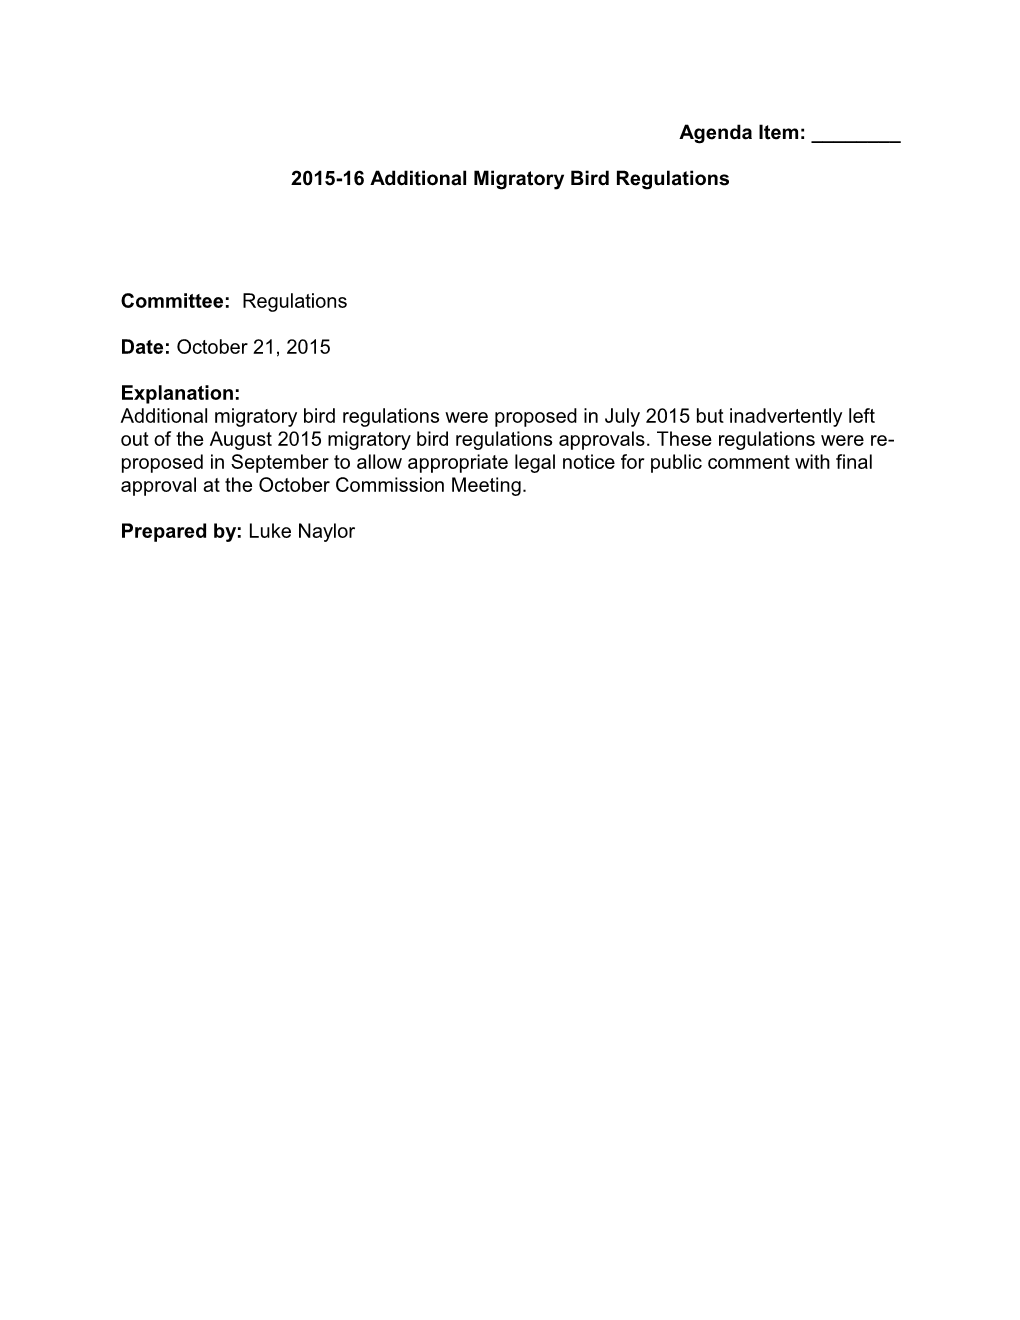 2015-16 Additional Migratory Bird Regulations Committee